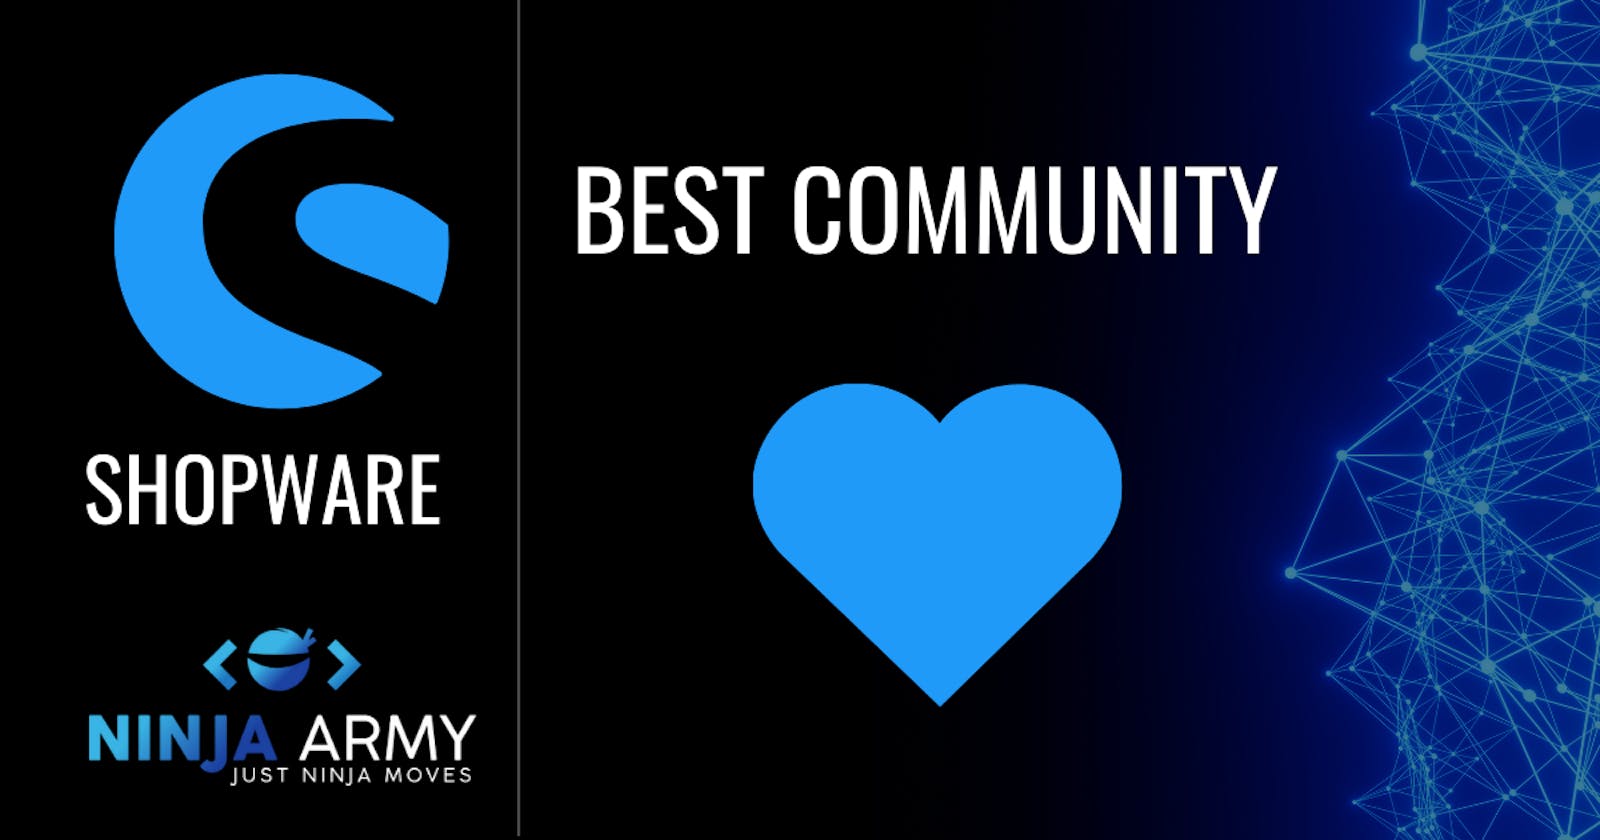 The best community is blue 💙 - Shopware